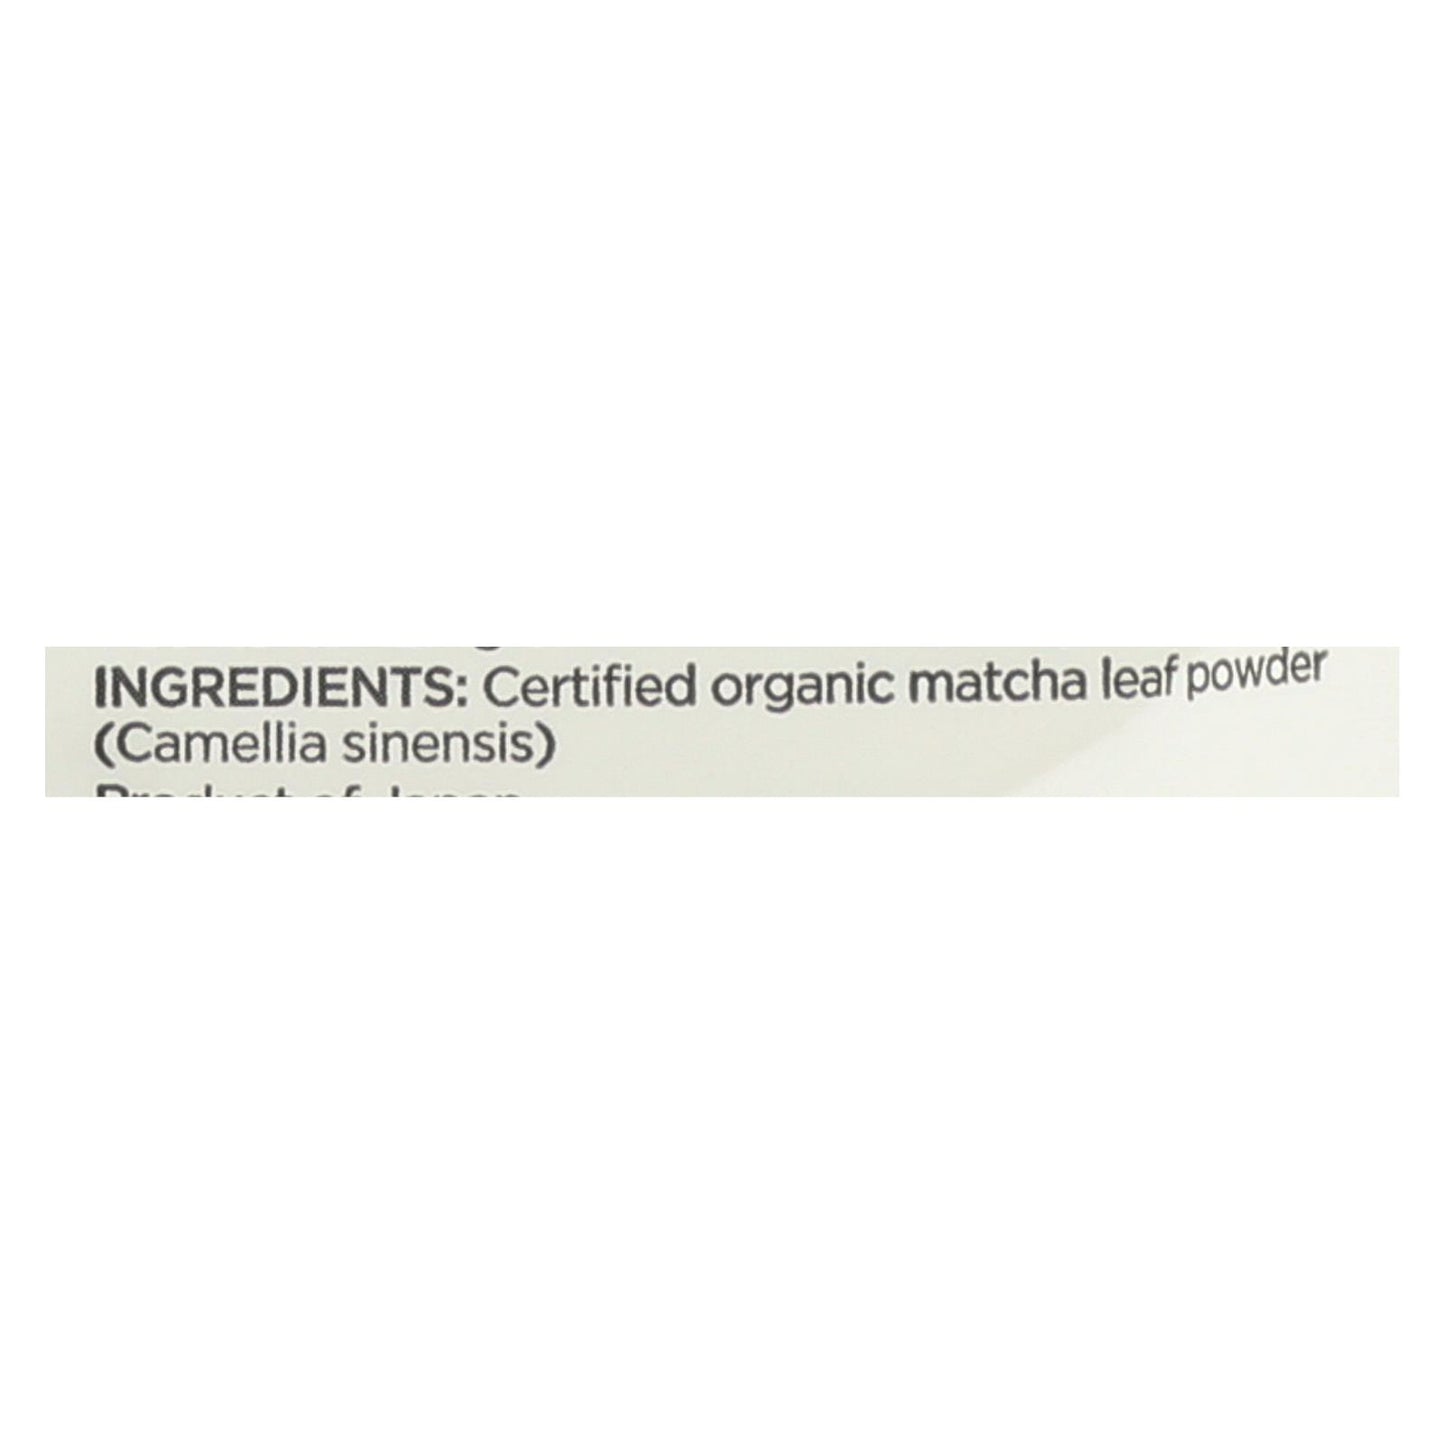 Navitas Organics Organic Matcha Powder  - Case Of 6 - 3 Oz